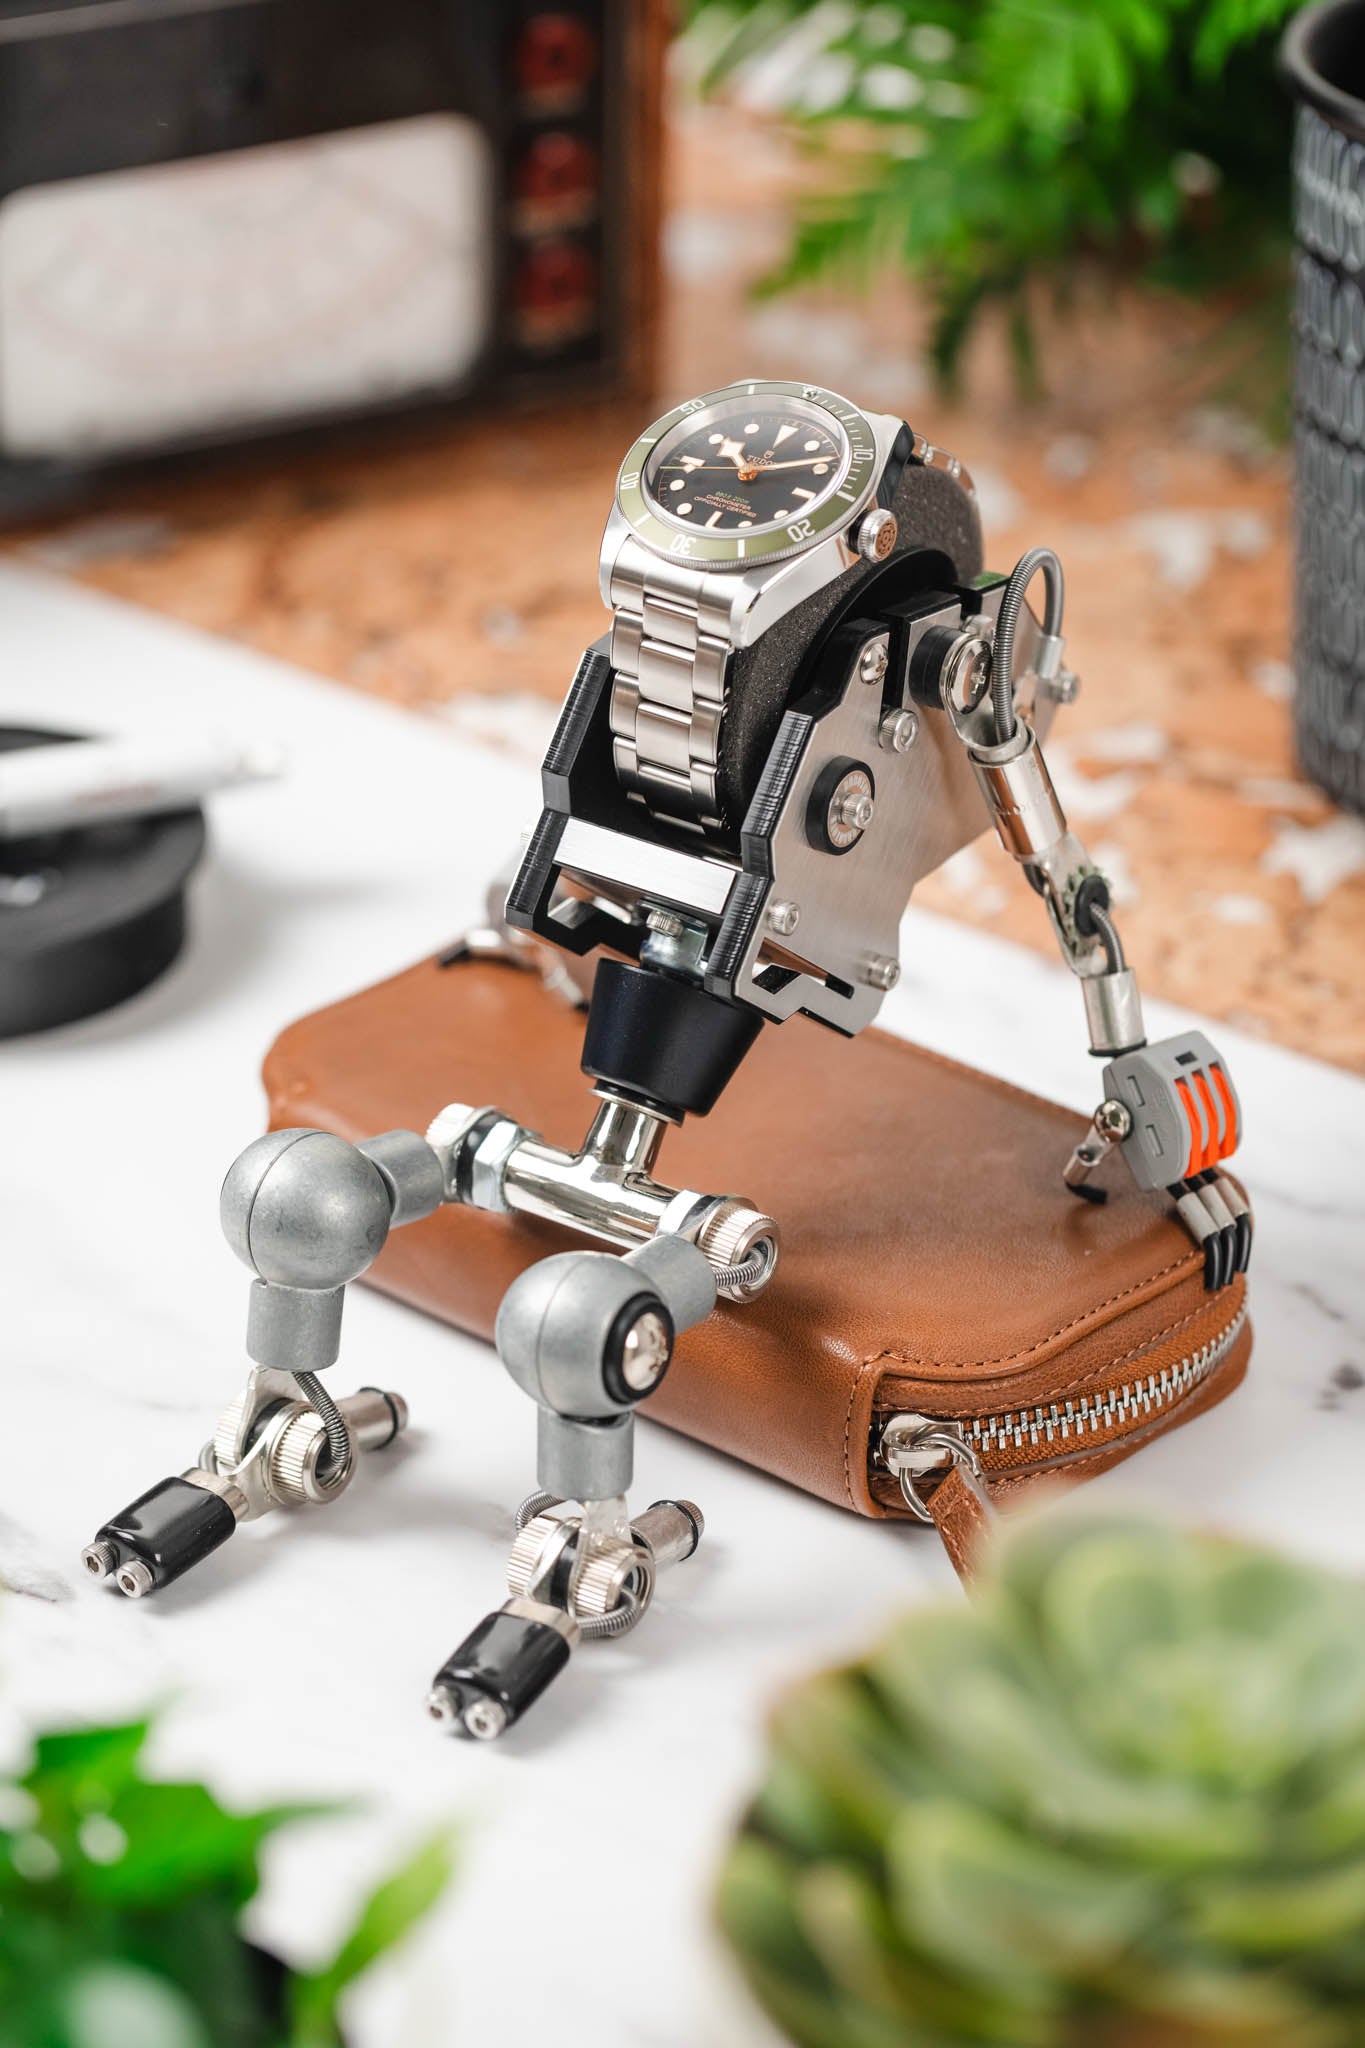 ROBOTOYS - SPUD - Silver Watch holder